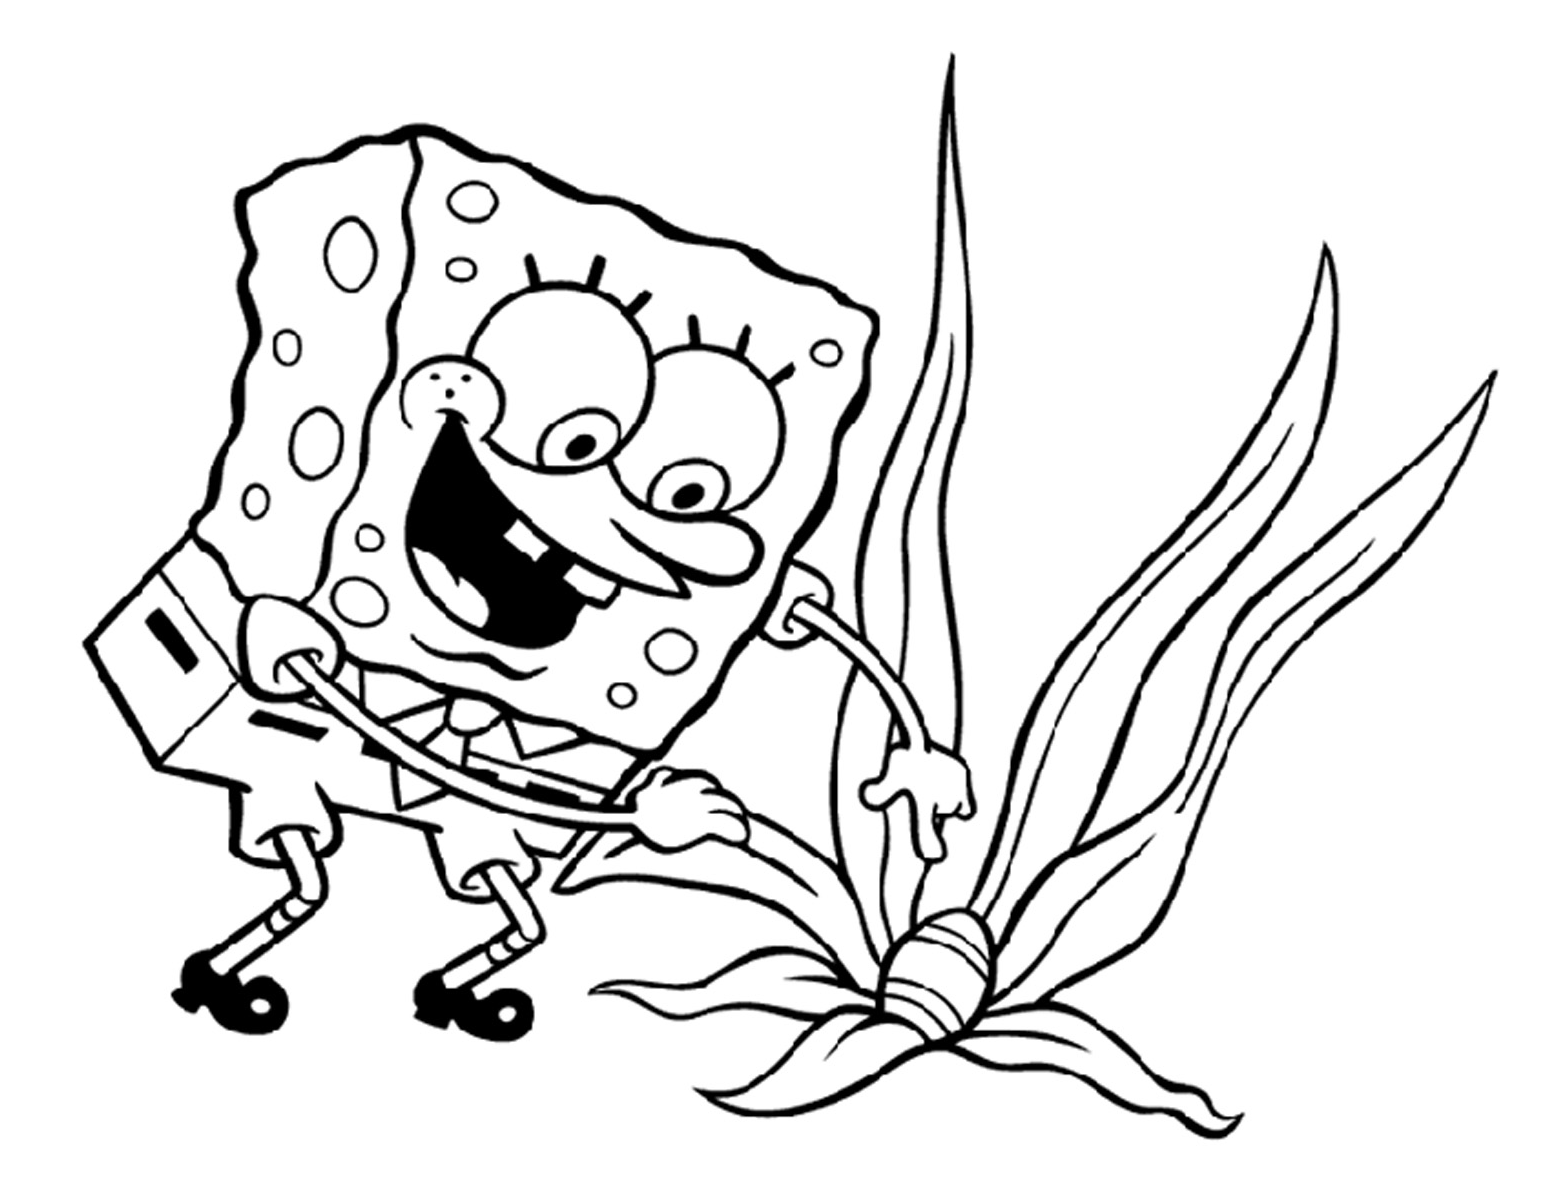 Sponge Bob Coloring Page ~ Child Coloring